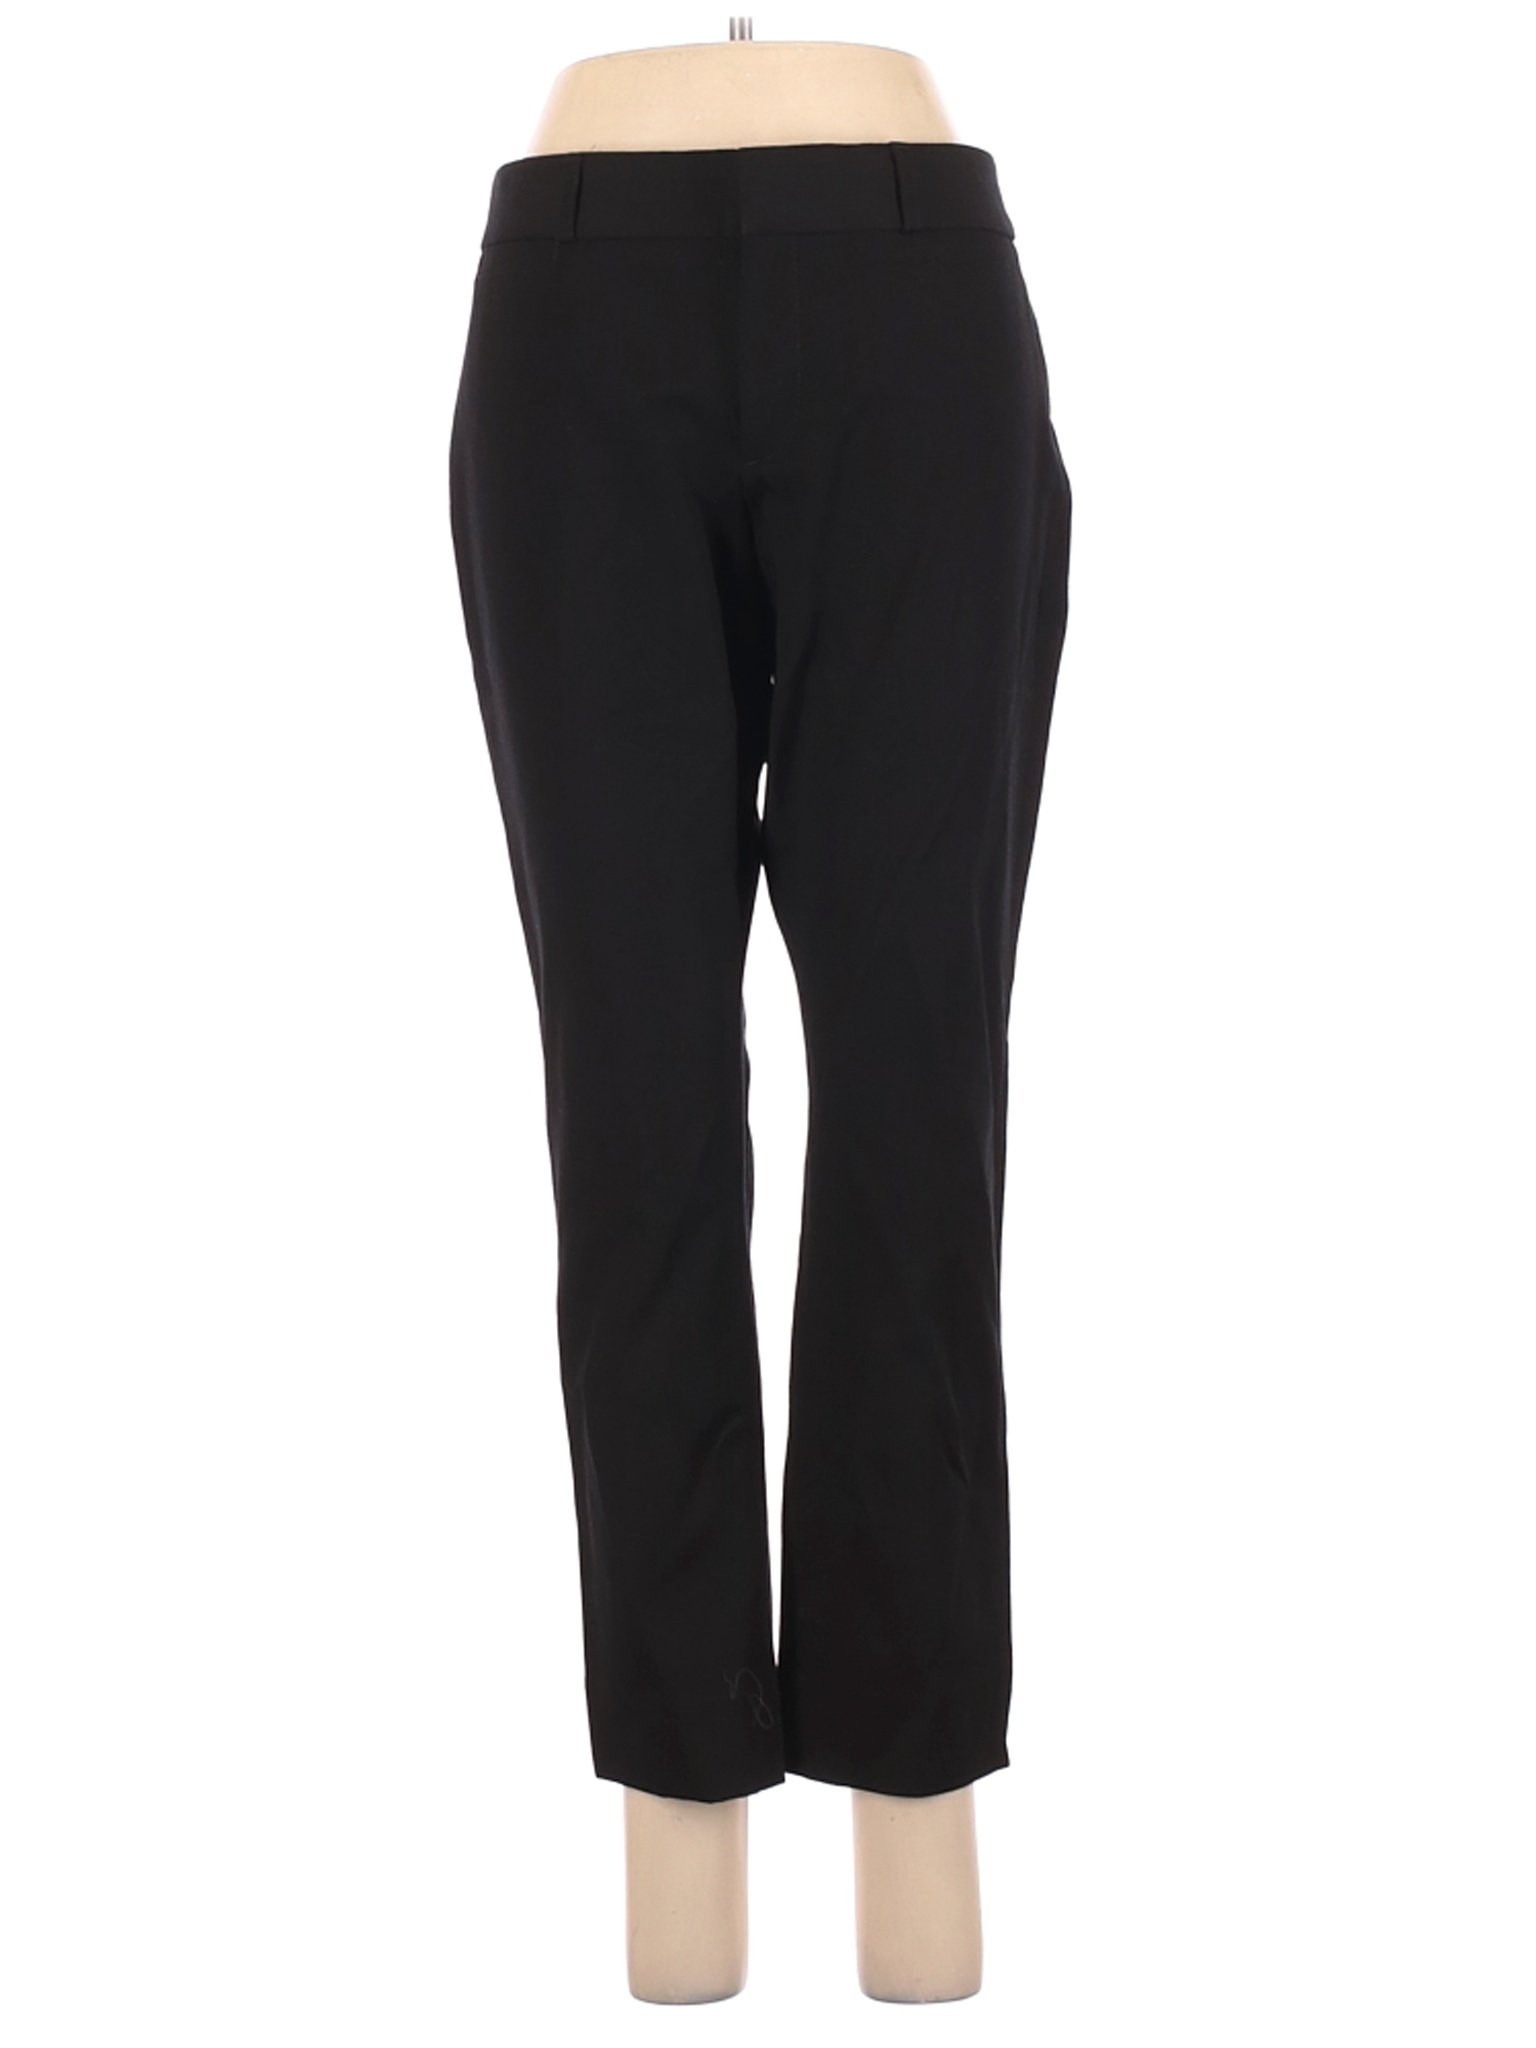 Banana Republic Women Black Dress Pants 8 Petites | eBay